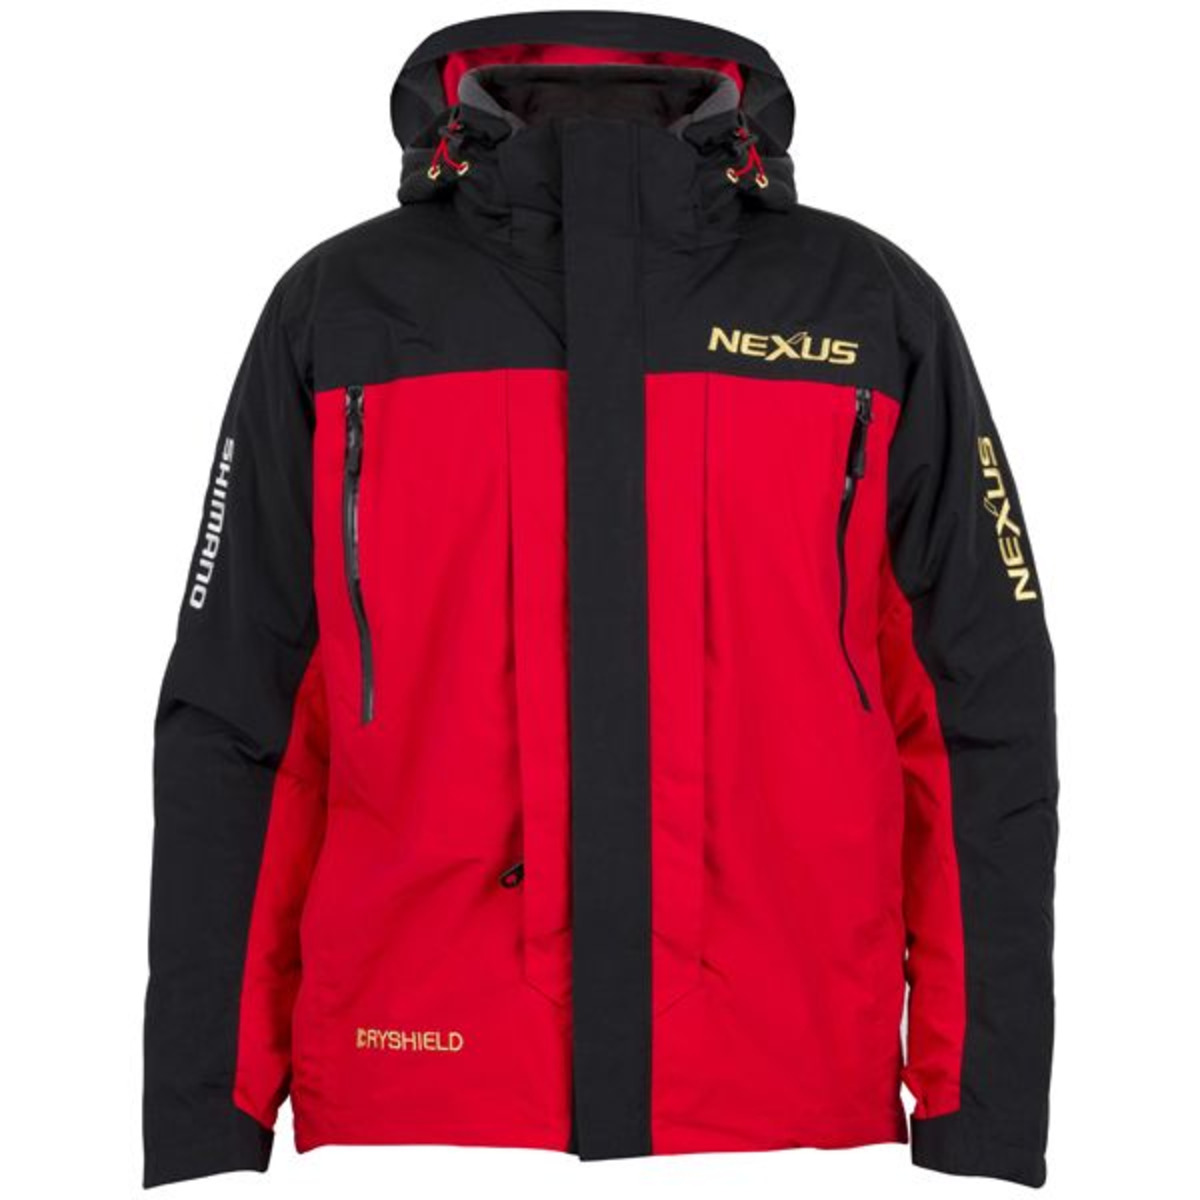 Shimano Nexus Dryshield Advance Cold Weather Jacket - Red - M